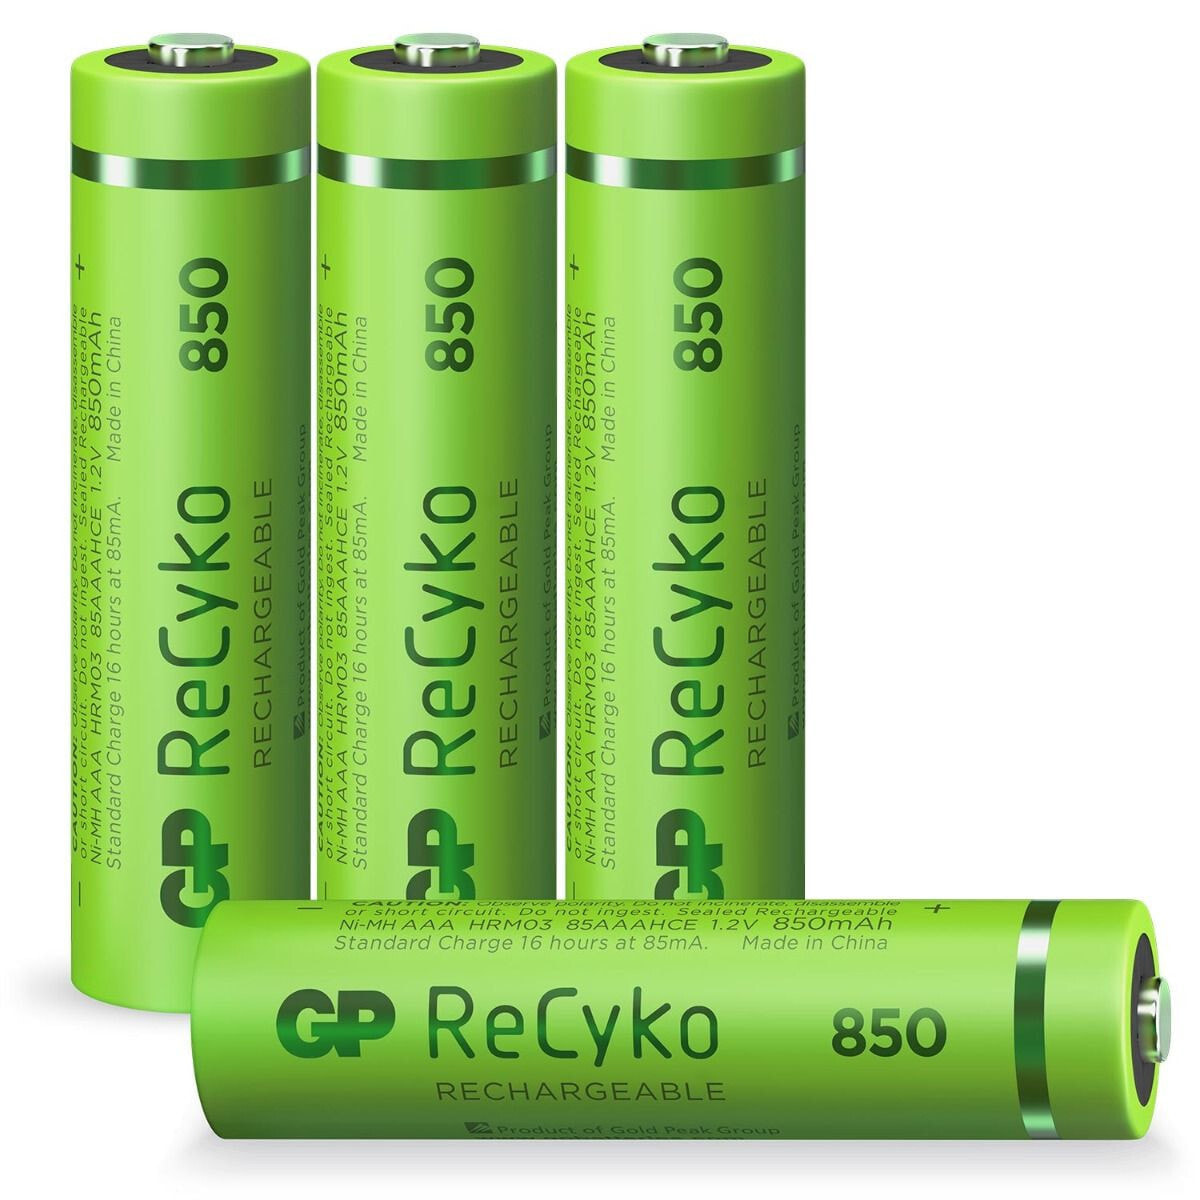 GP Batteries Rechargeable batteries 12085AAAHCE-C4 промышленная аккумуляторная батарея Никель-металл-гидридный (NiMH) 850 mAh 1,2 V